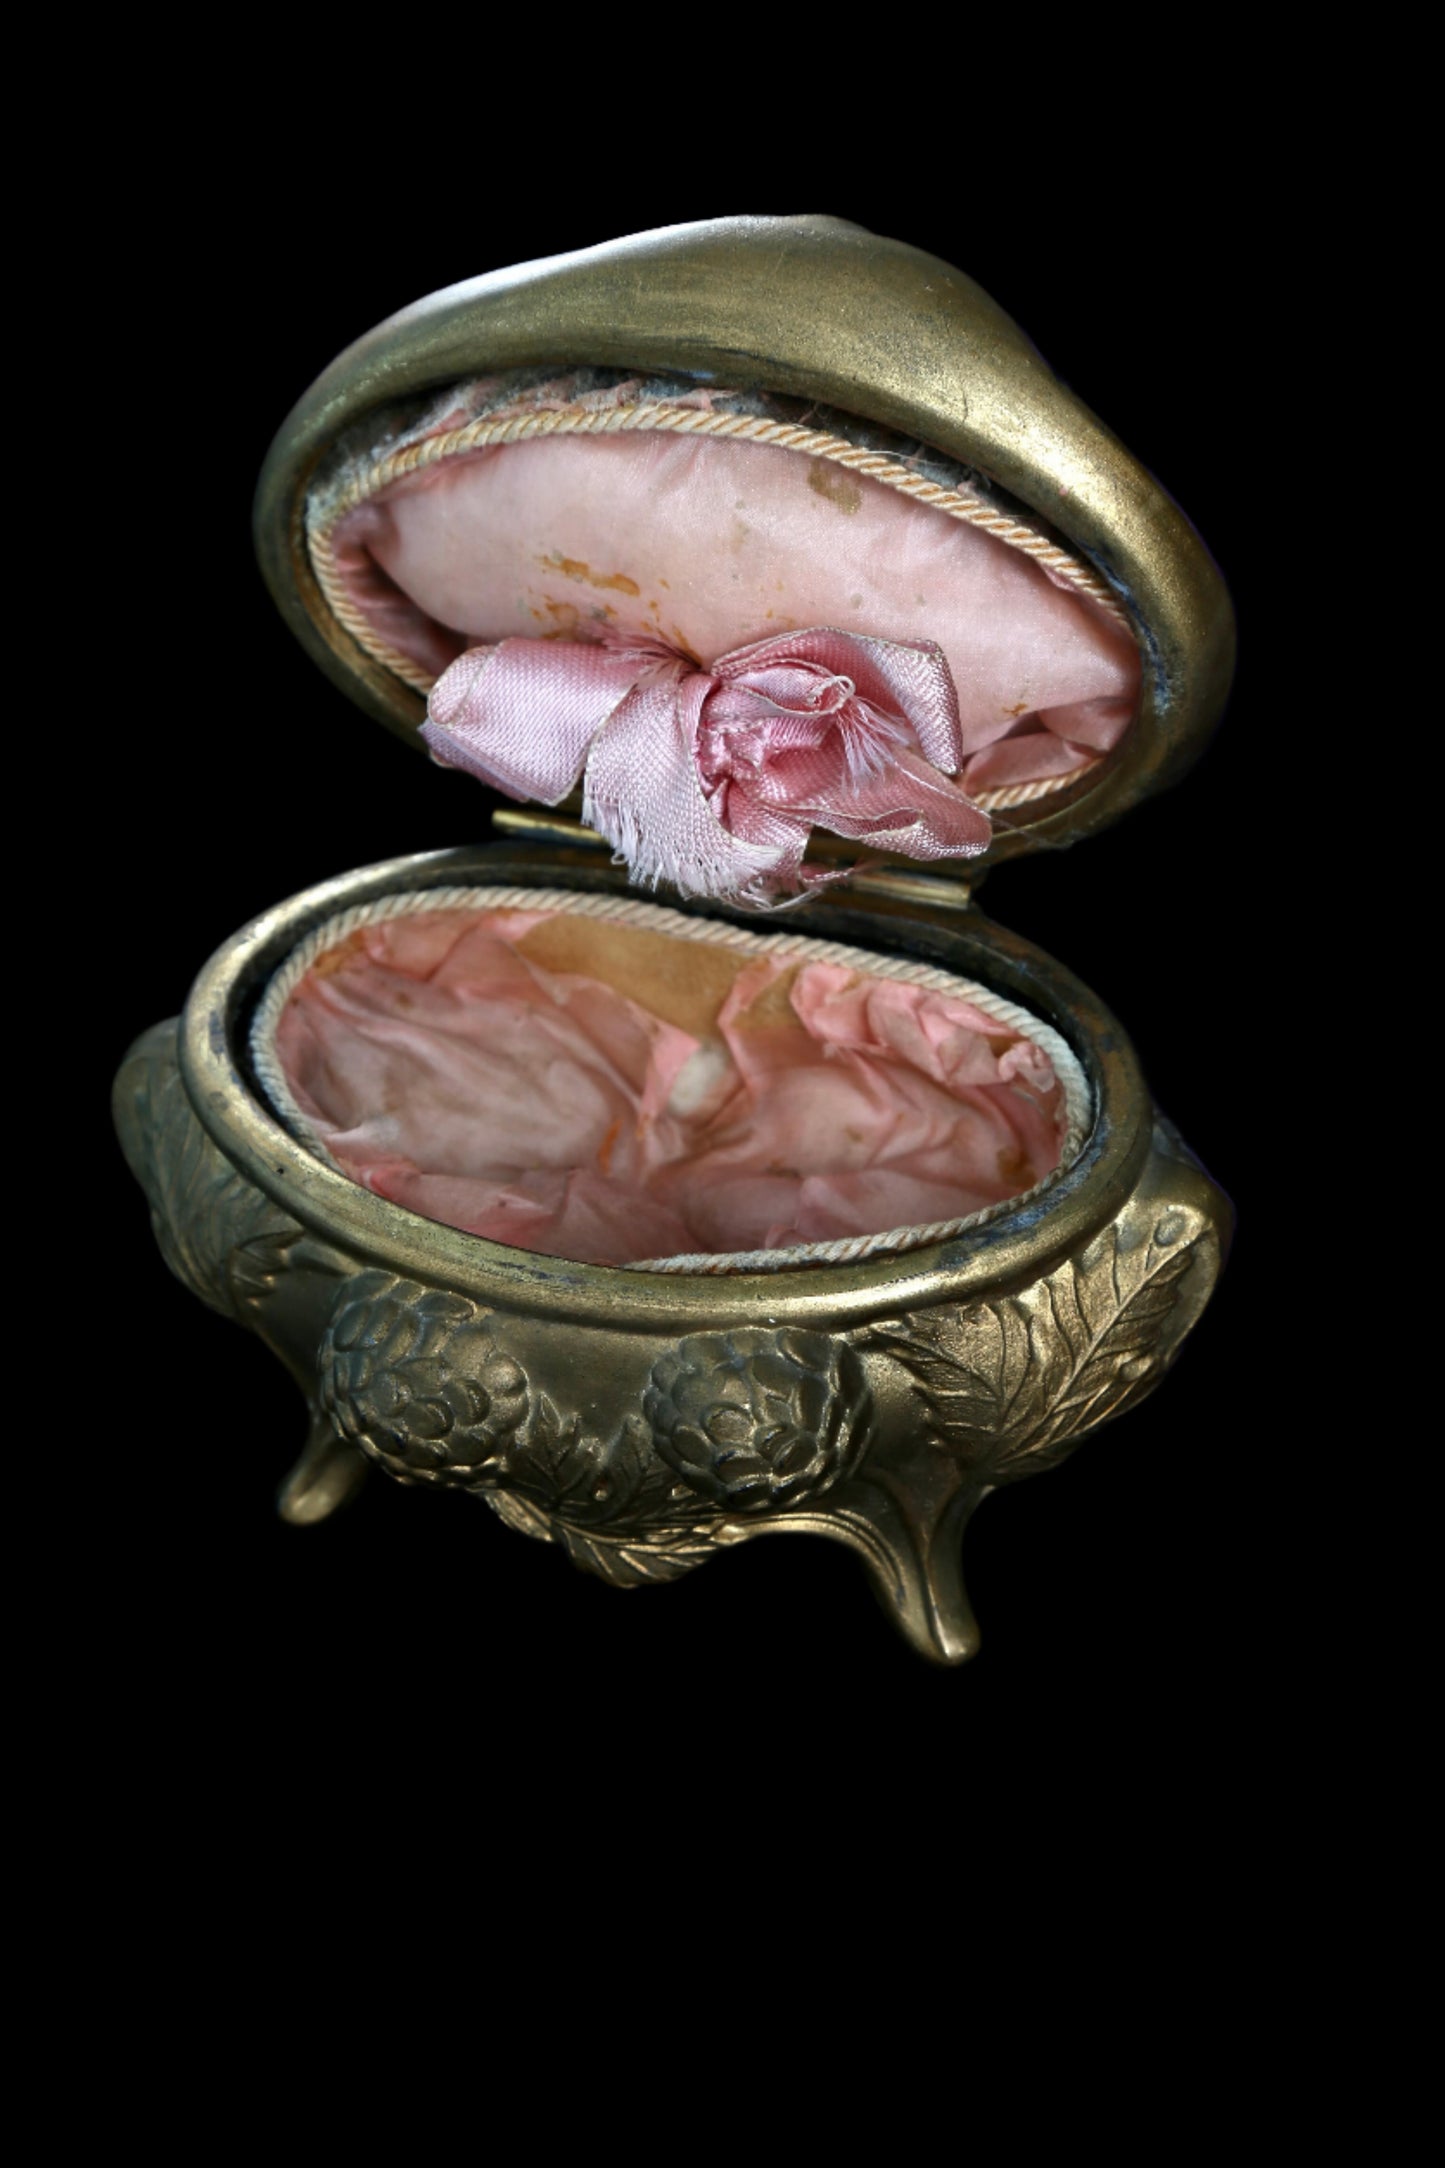 1900's Large Pinecone Jewelry Casket